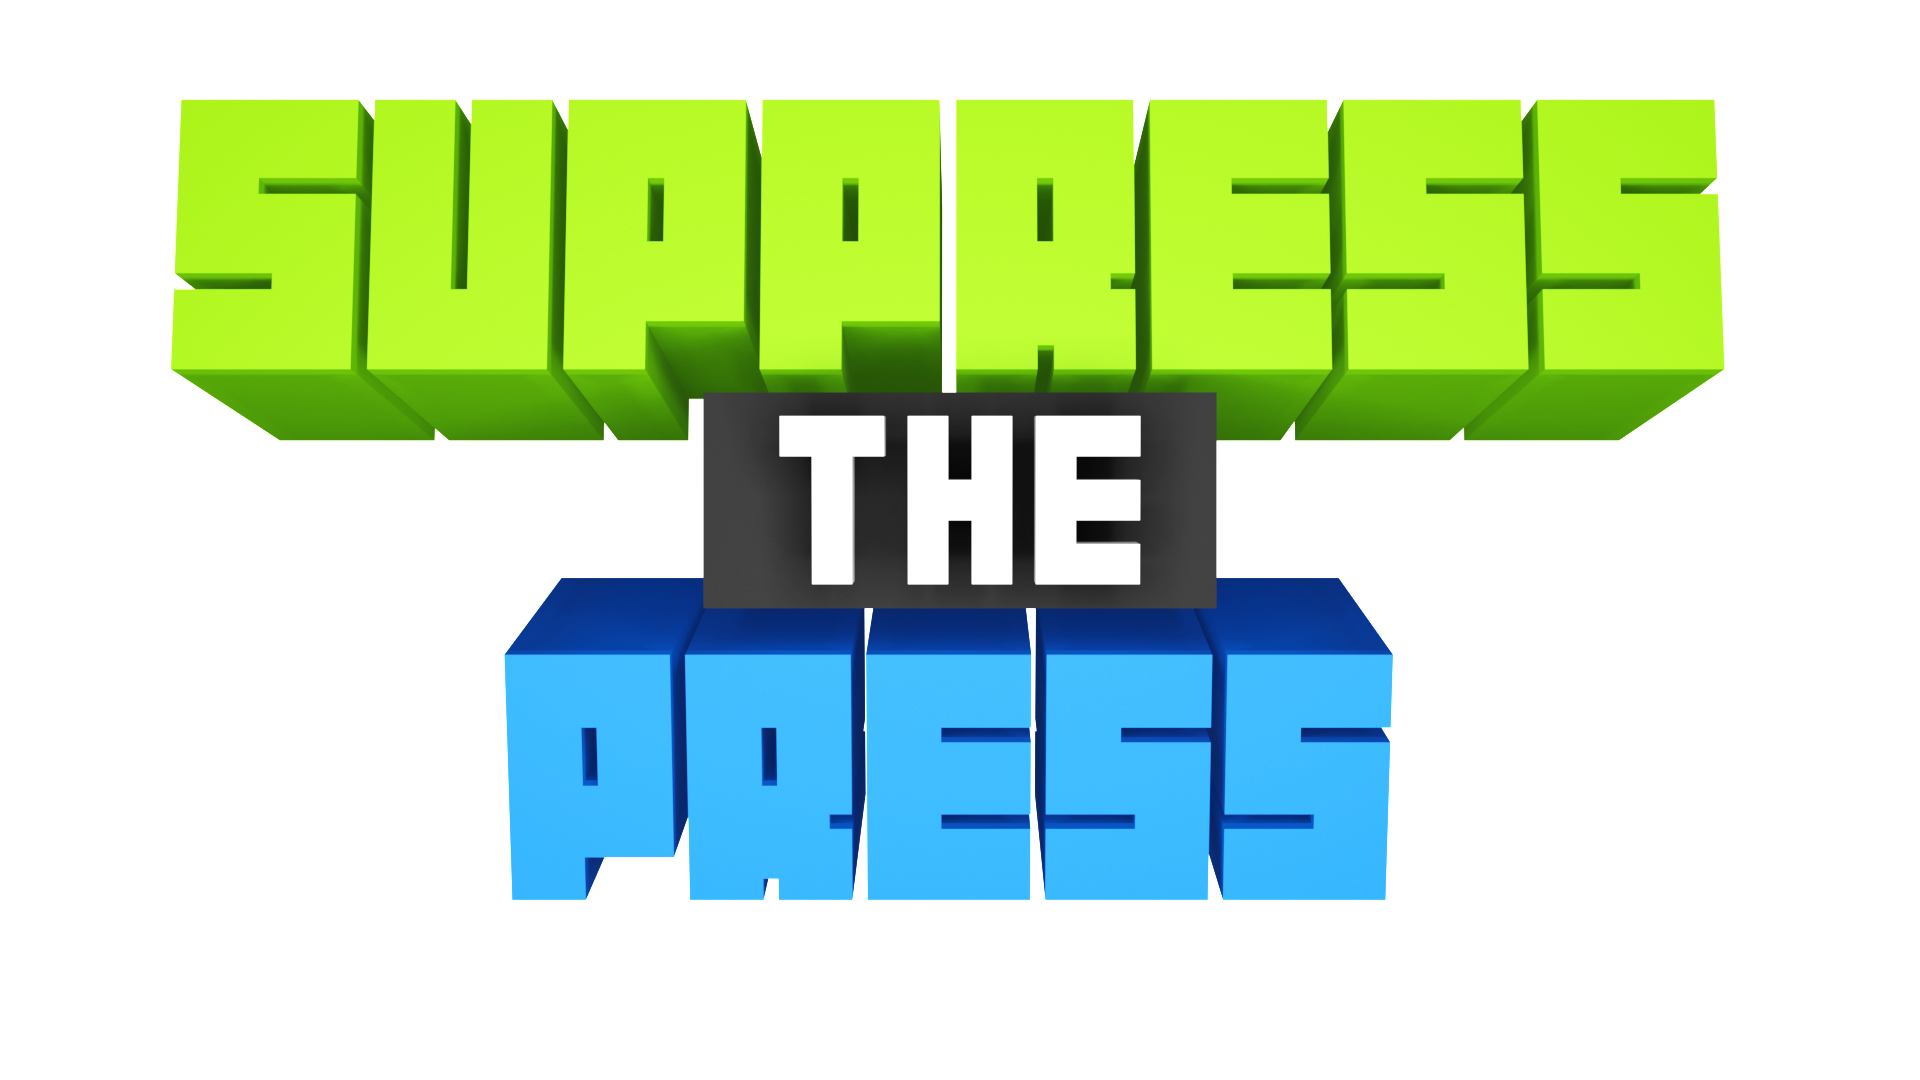 Suppress The Press